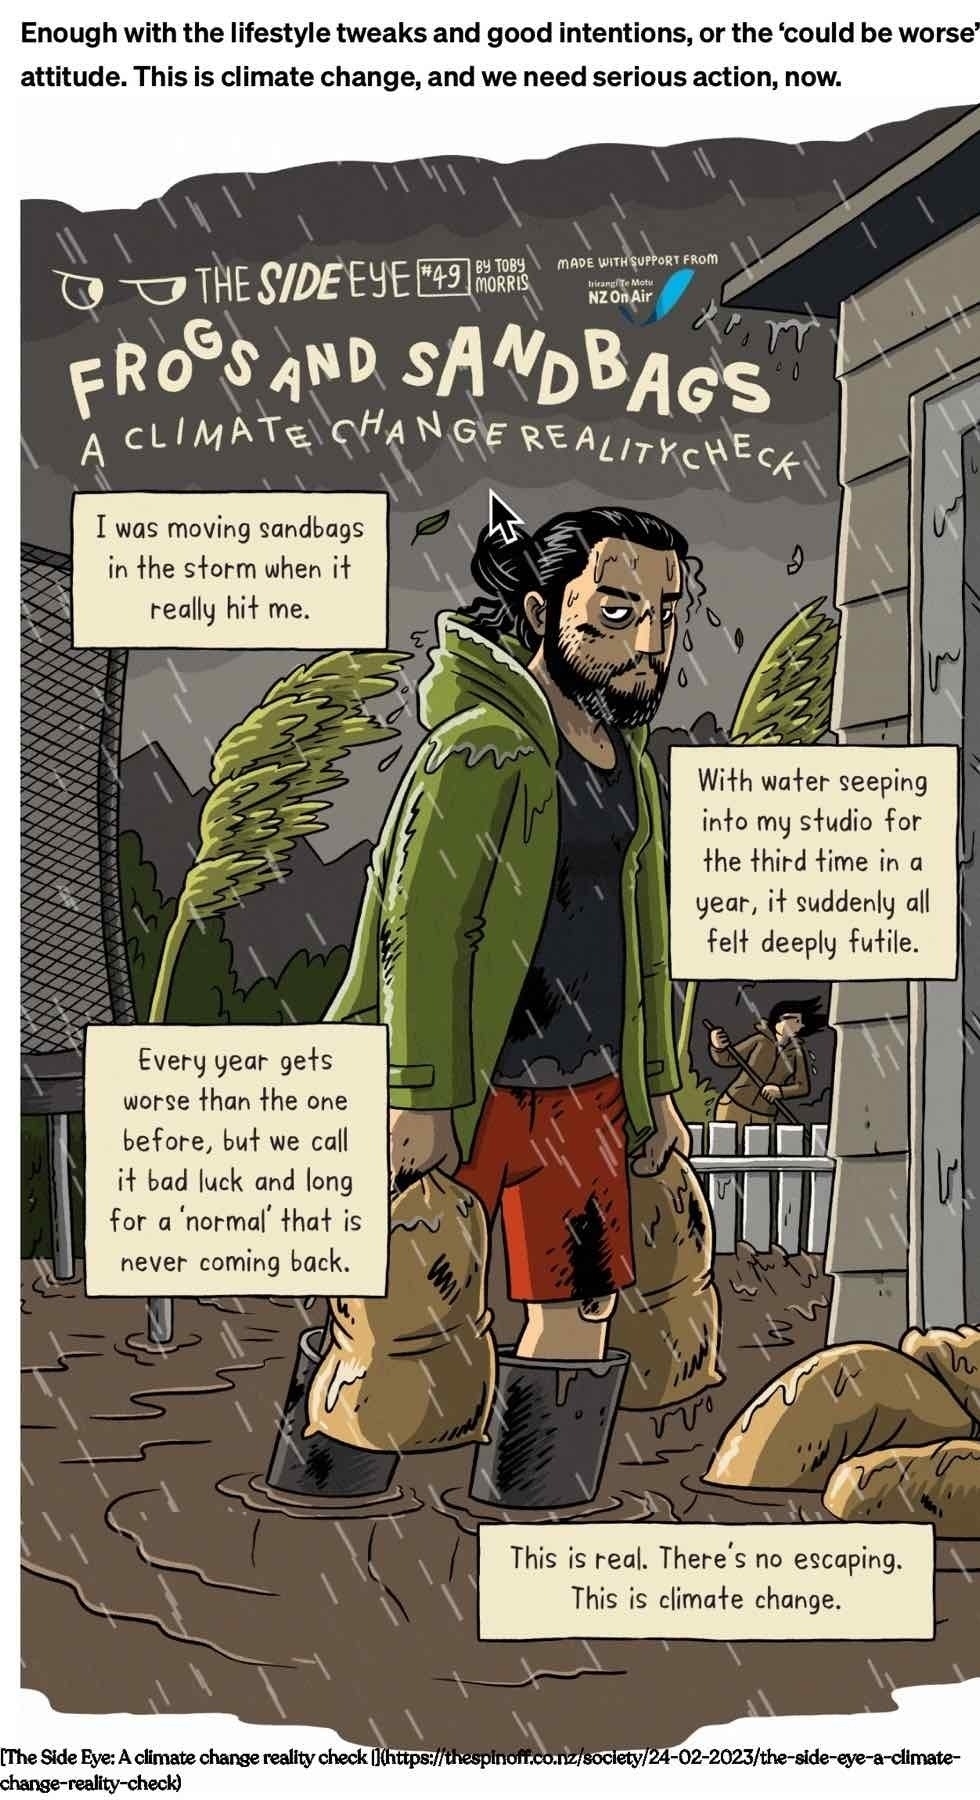 Toby Morris SideEye climate change cartoon. 